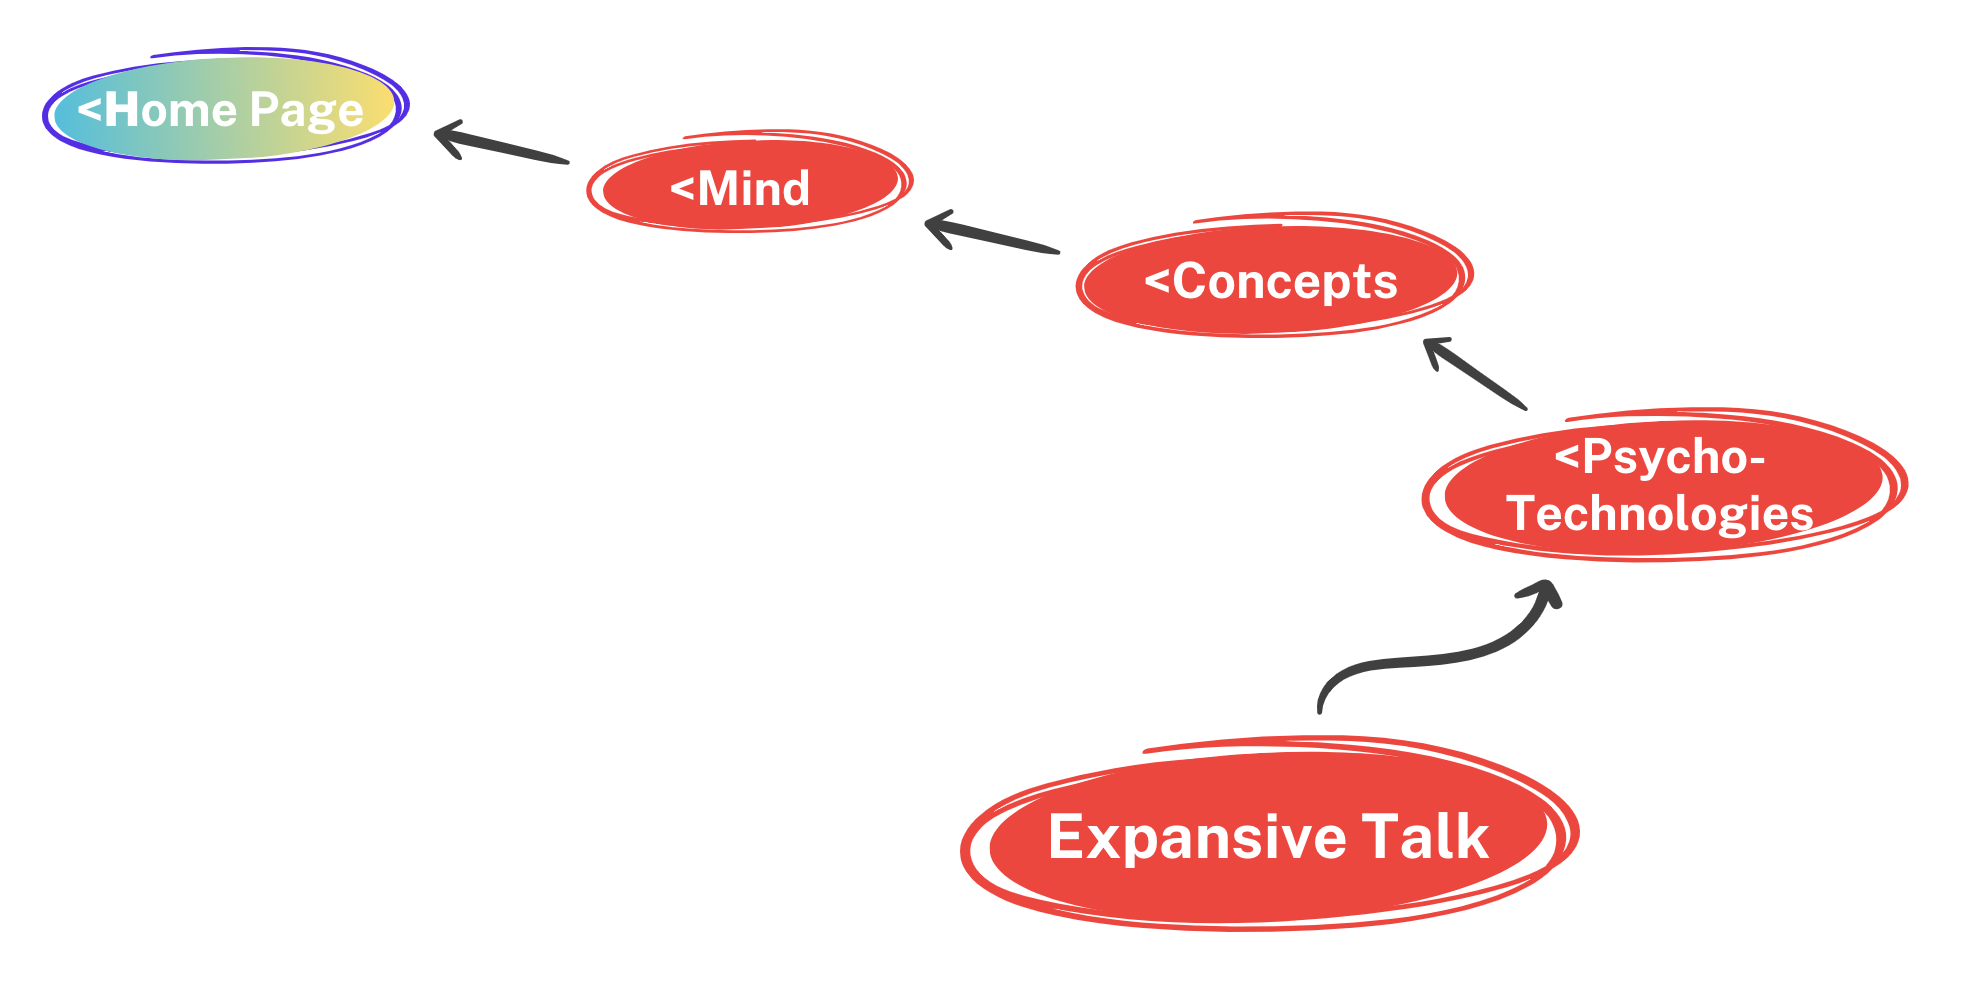 Expansive Talk